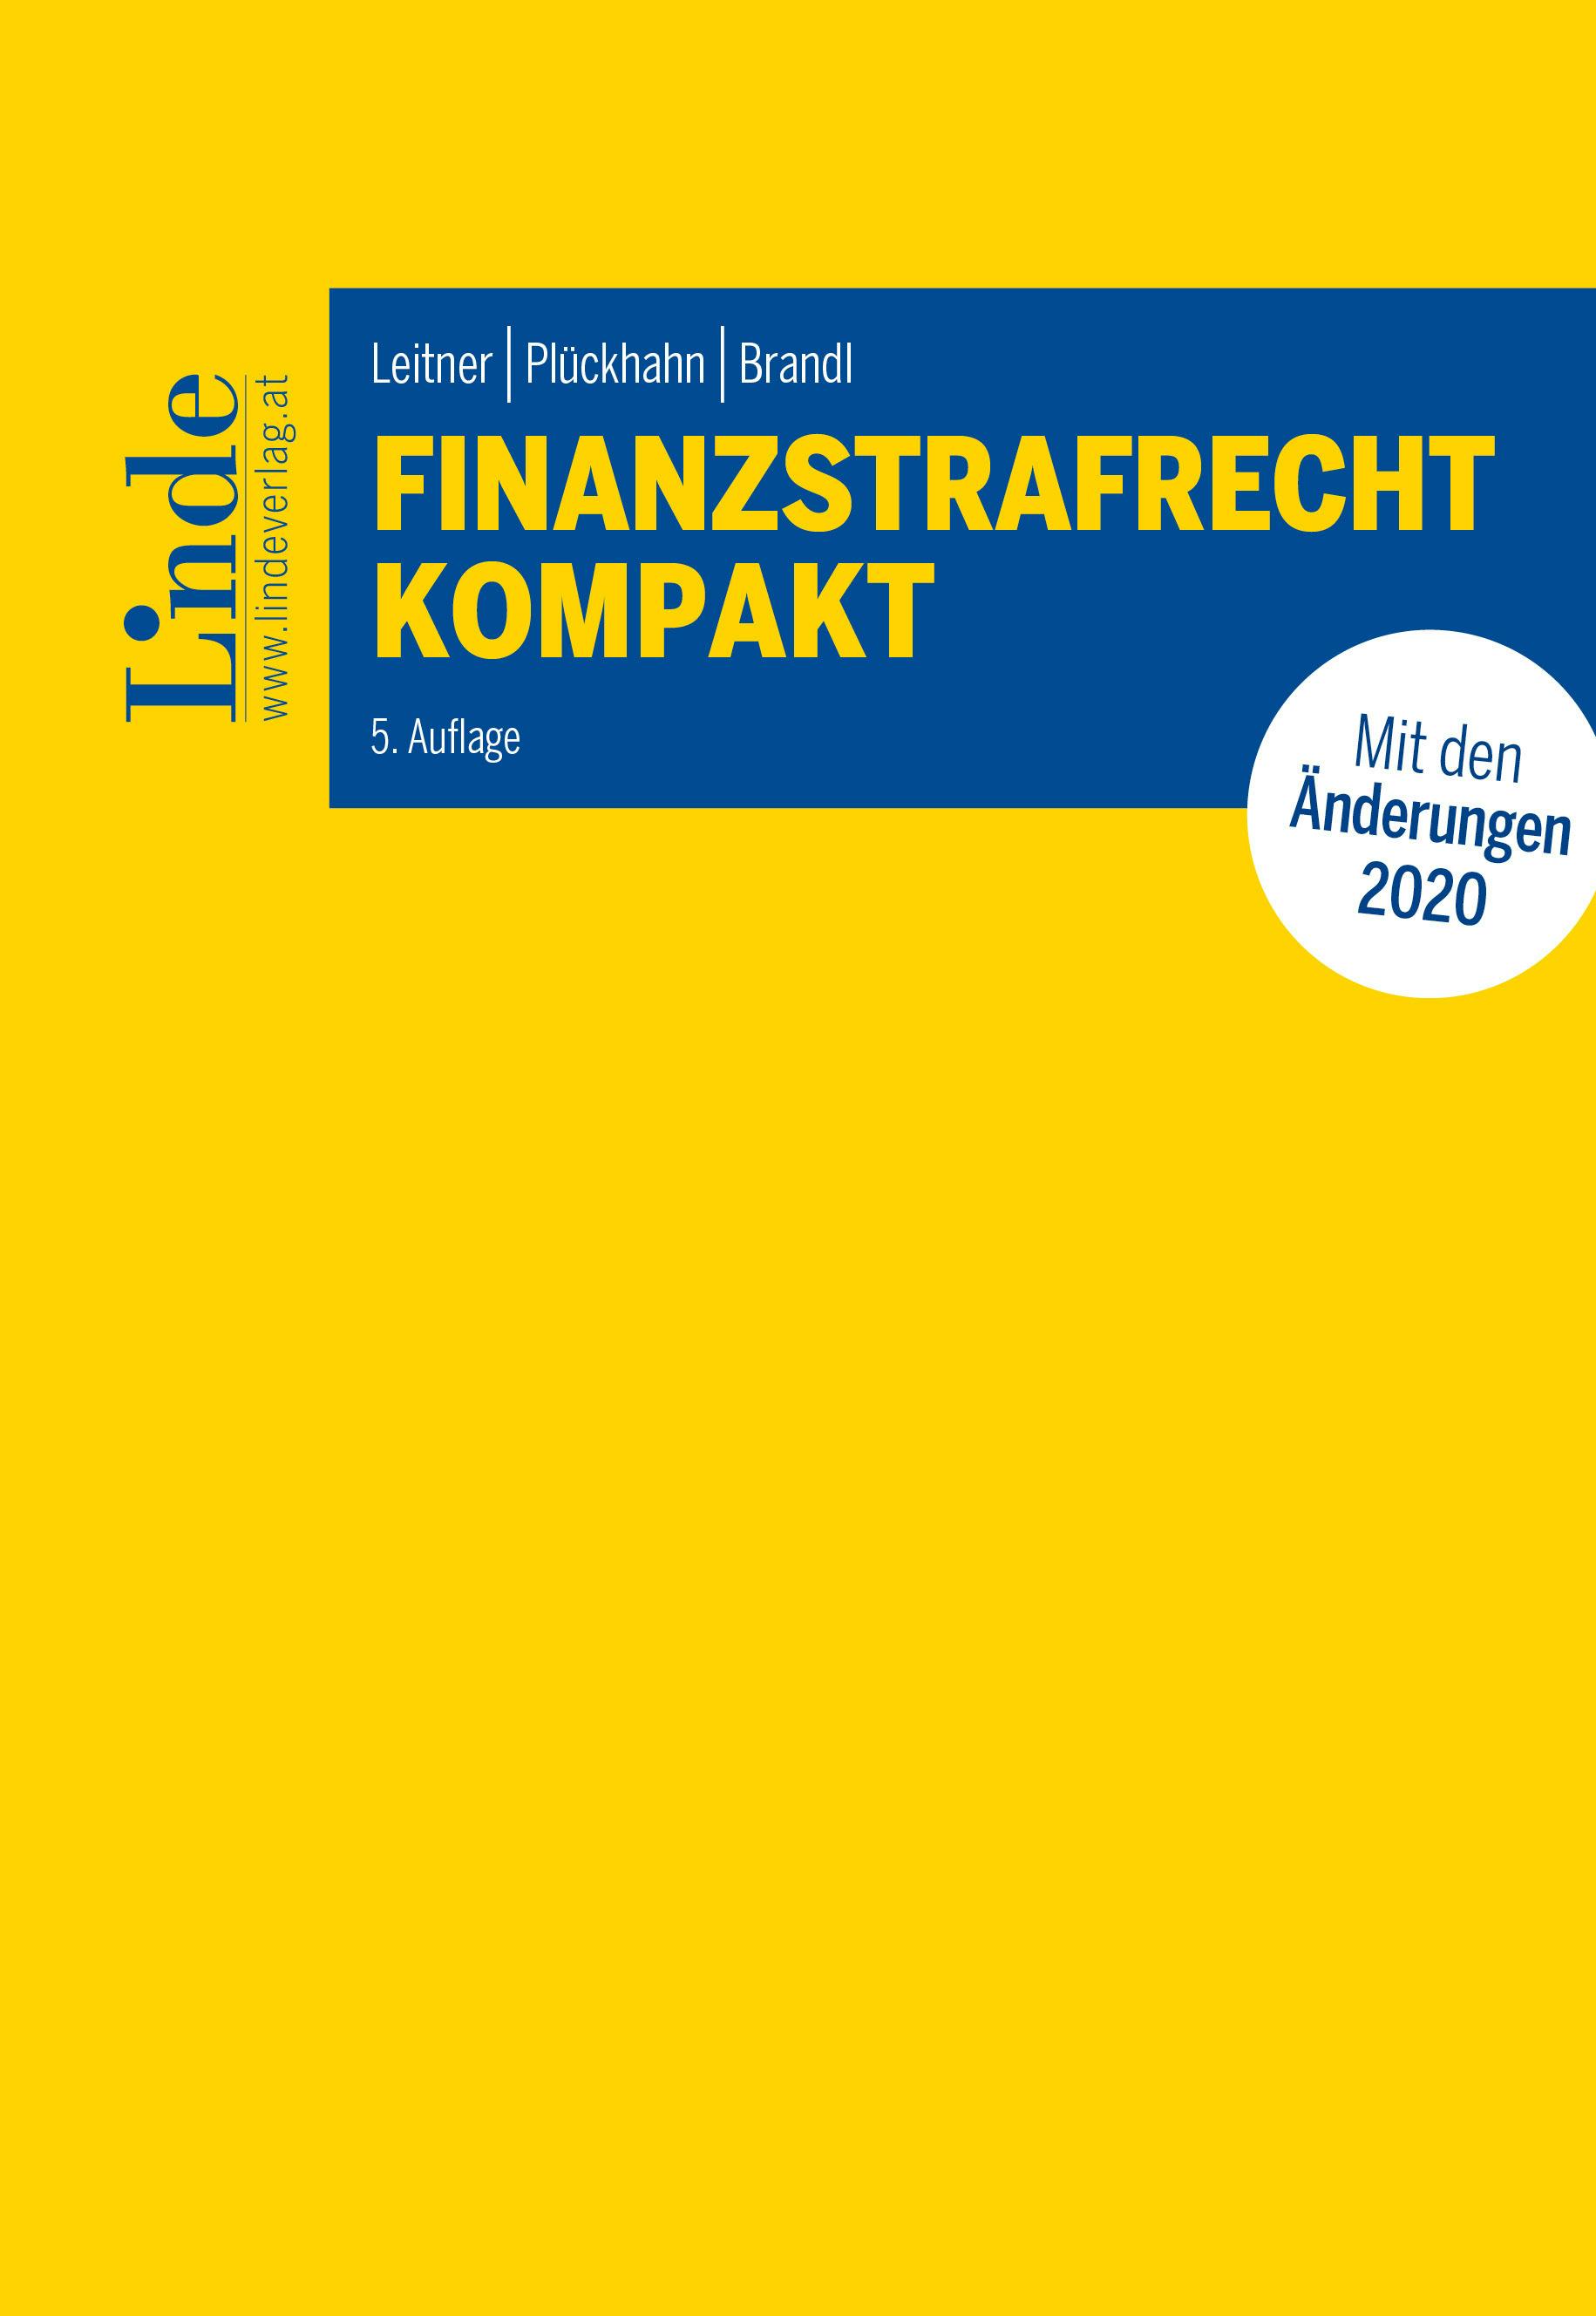 Leitner | Plückhahn | Brandl
Finanzstrafrecht kompakt